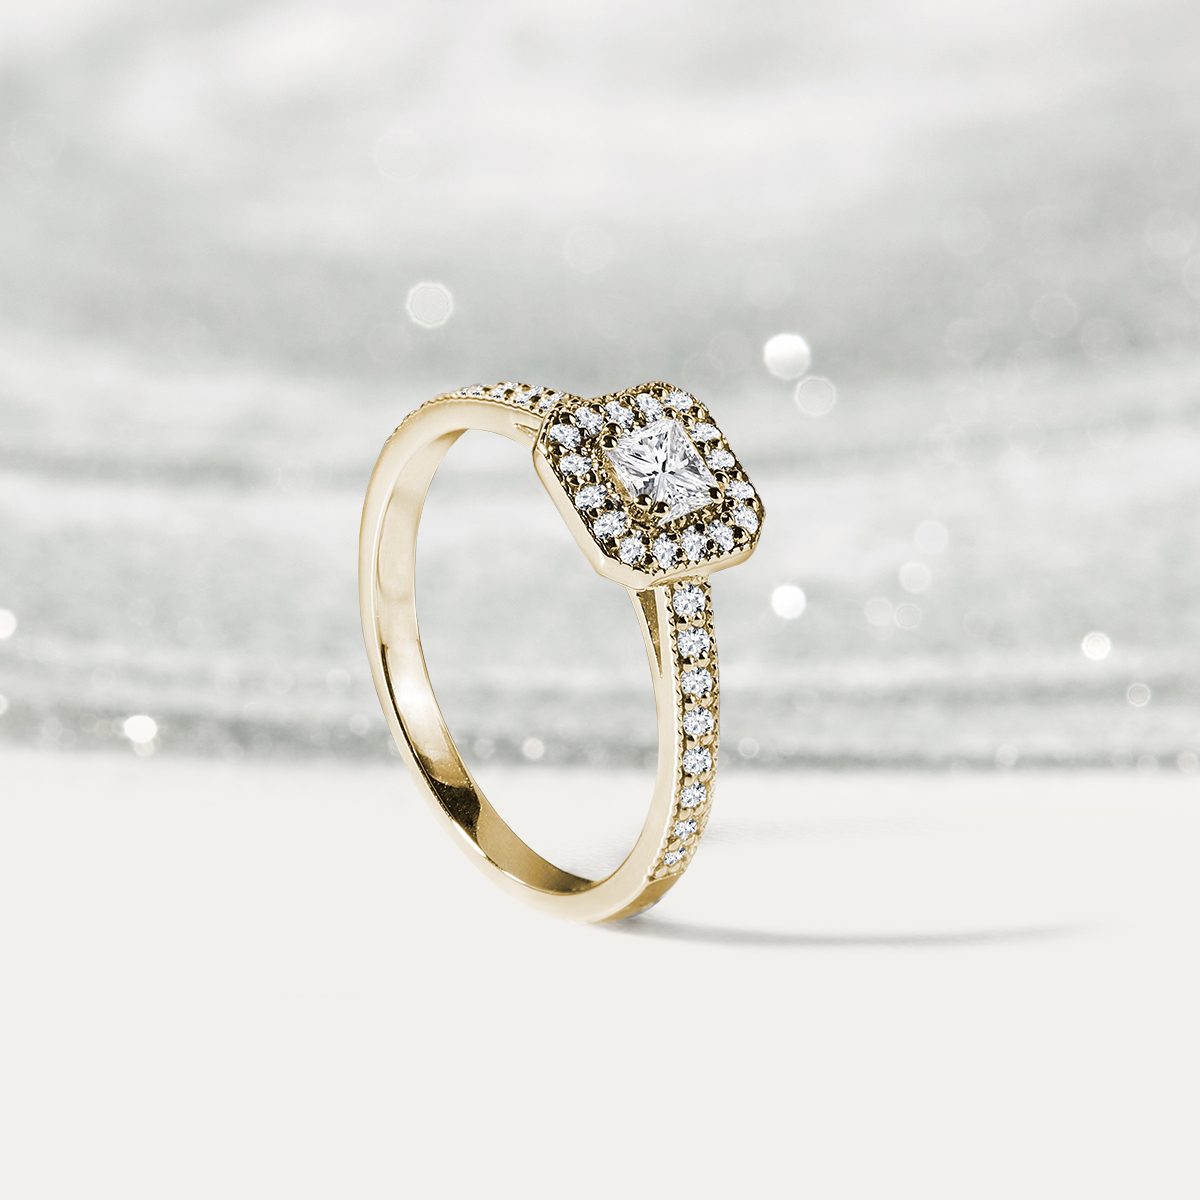 Luxury diamond ring in yellow 14k gold - KLENOTA